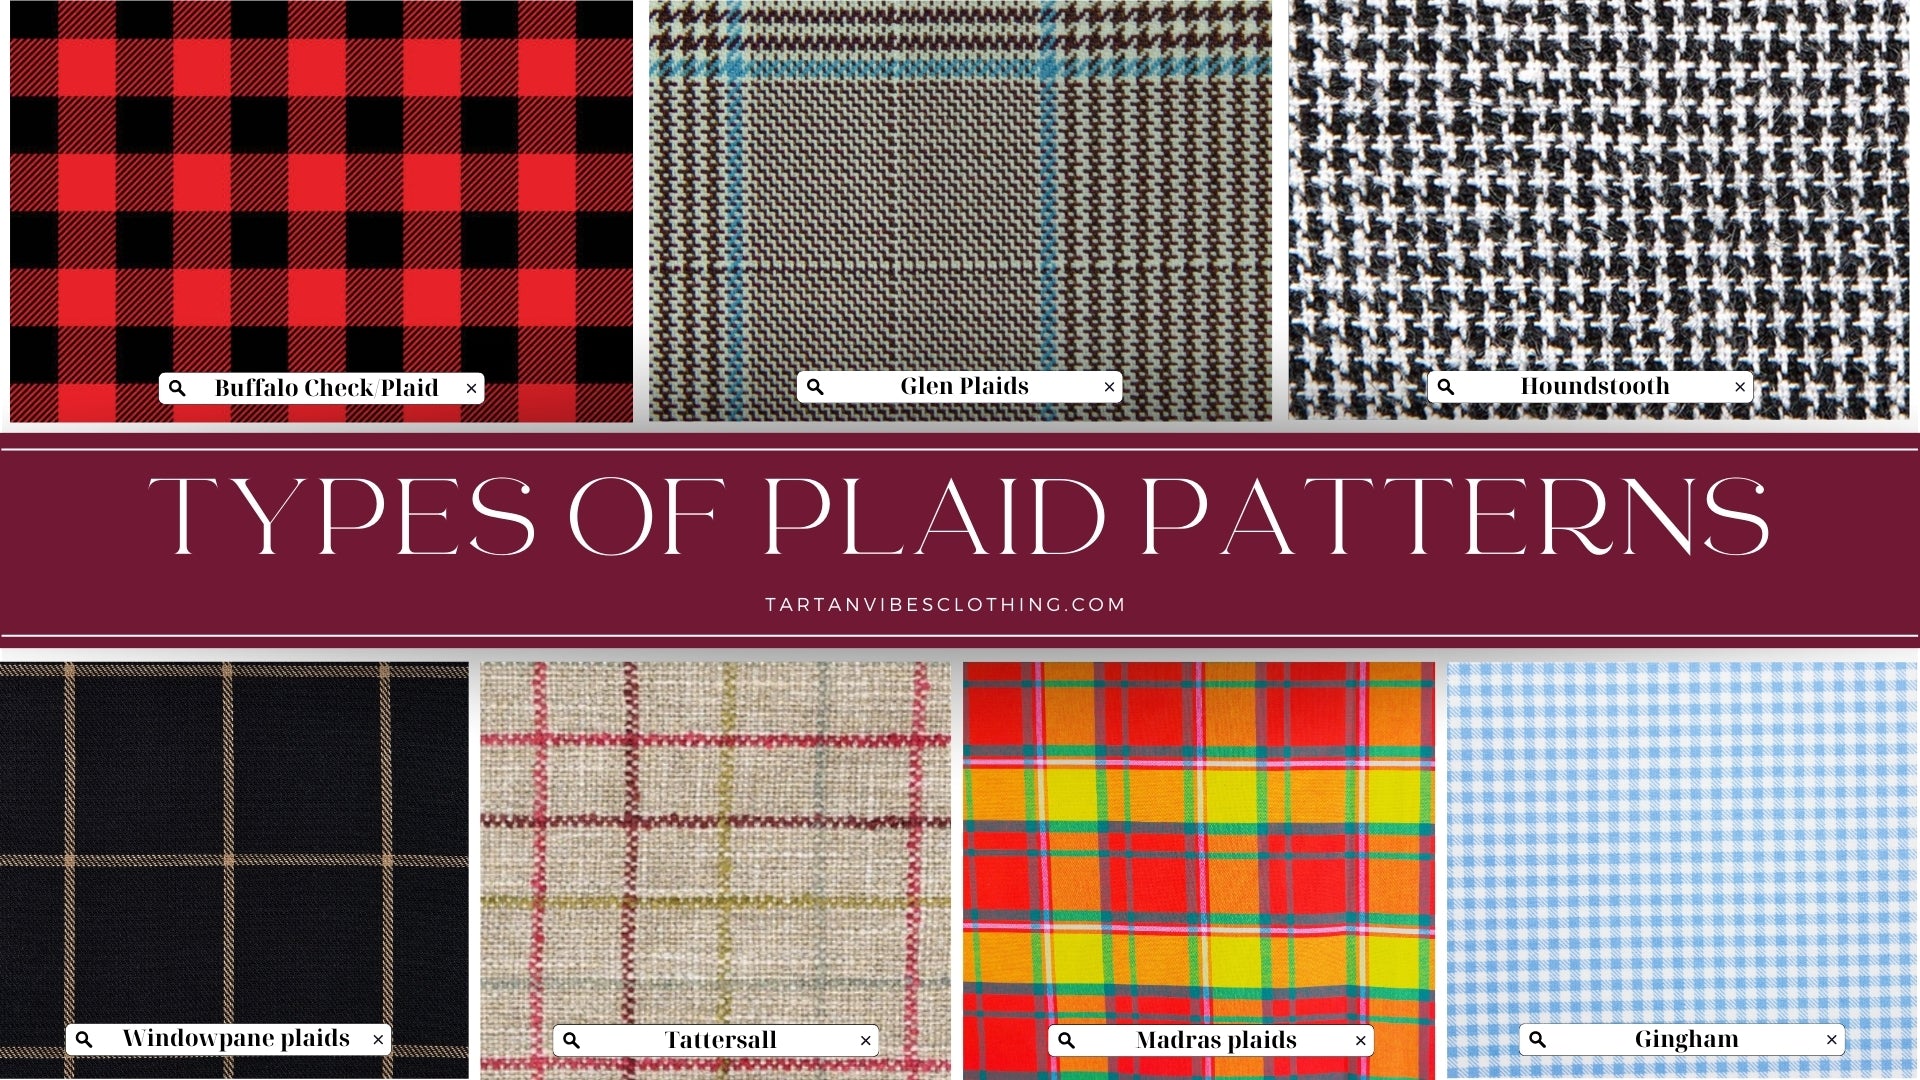 Types of Plaid Patterns